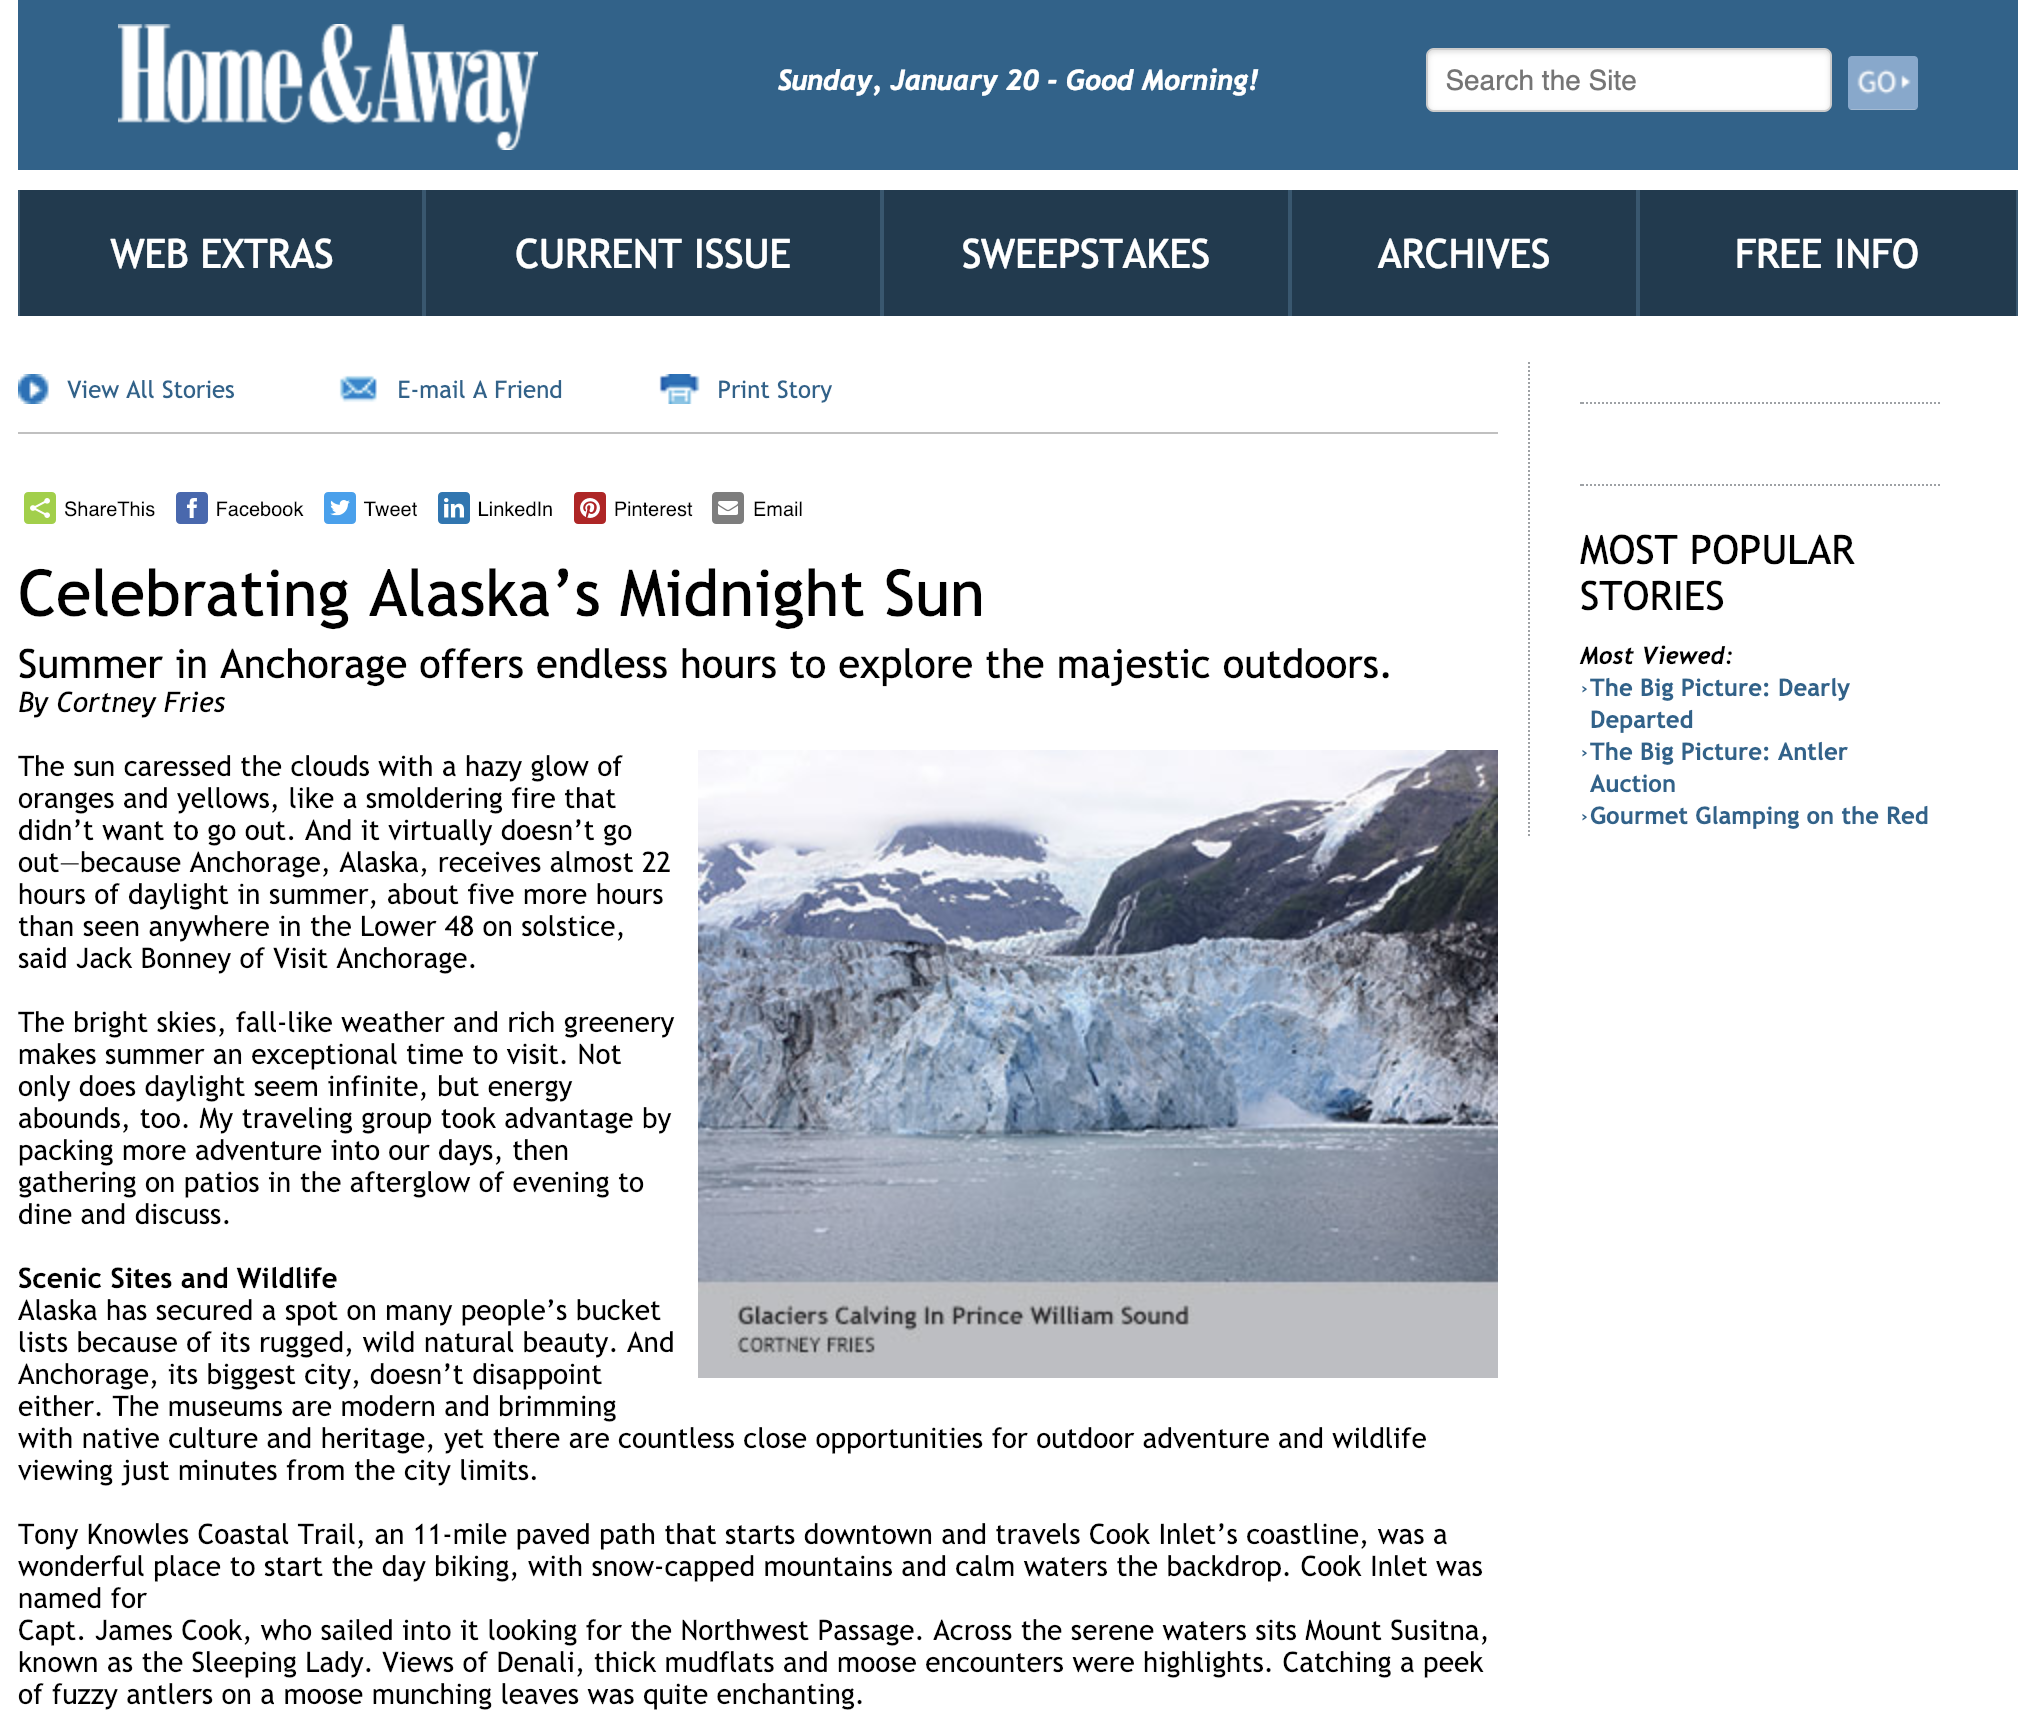 Celebrating the Midnight Sun in Alaska